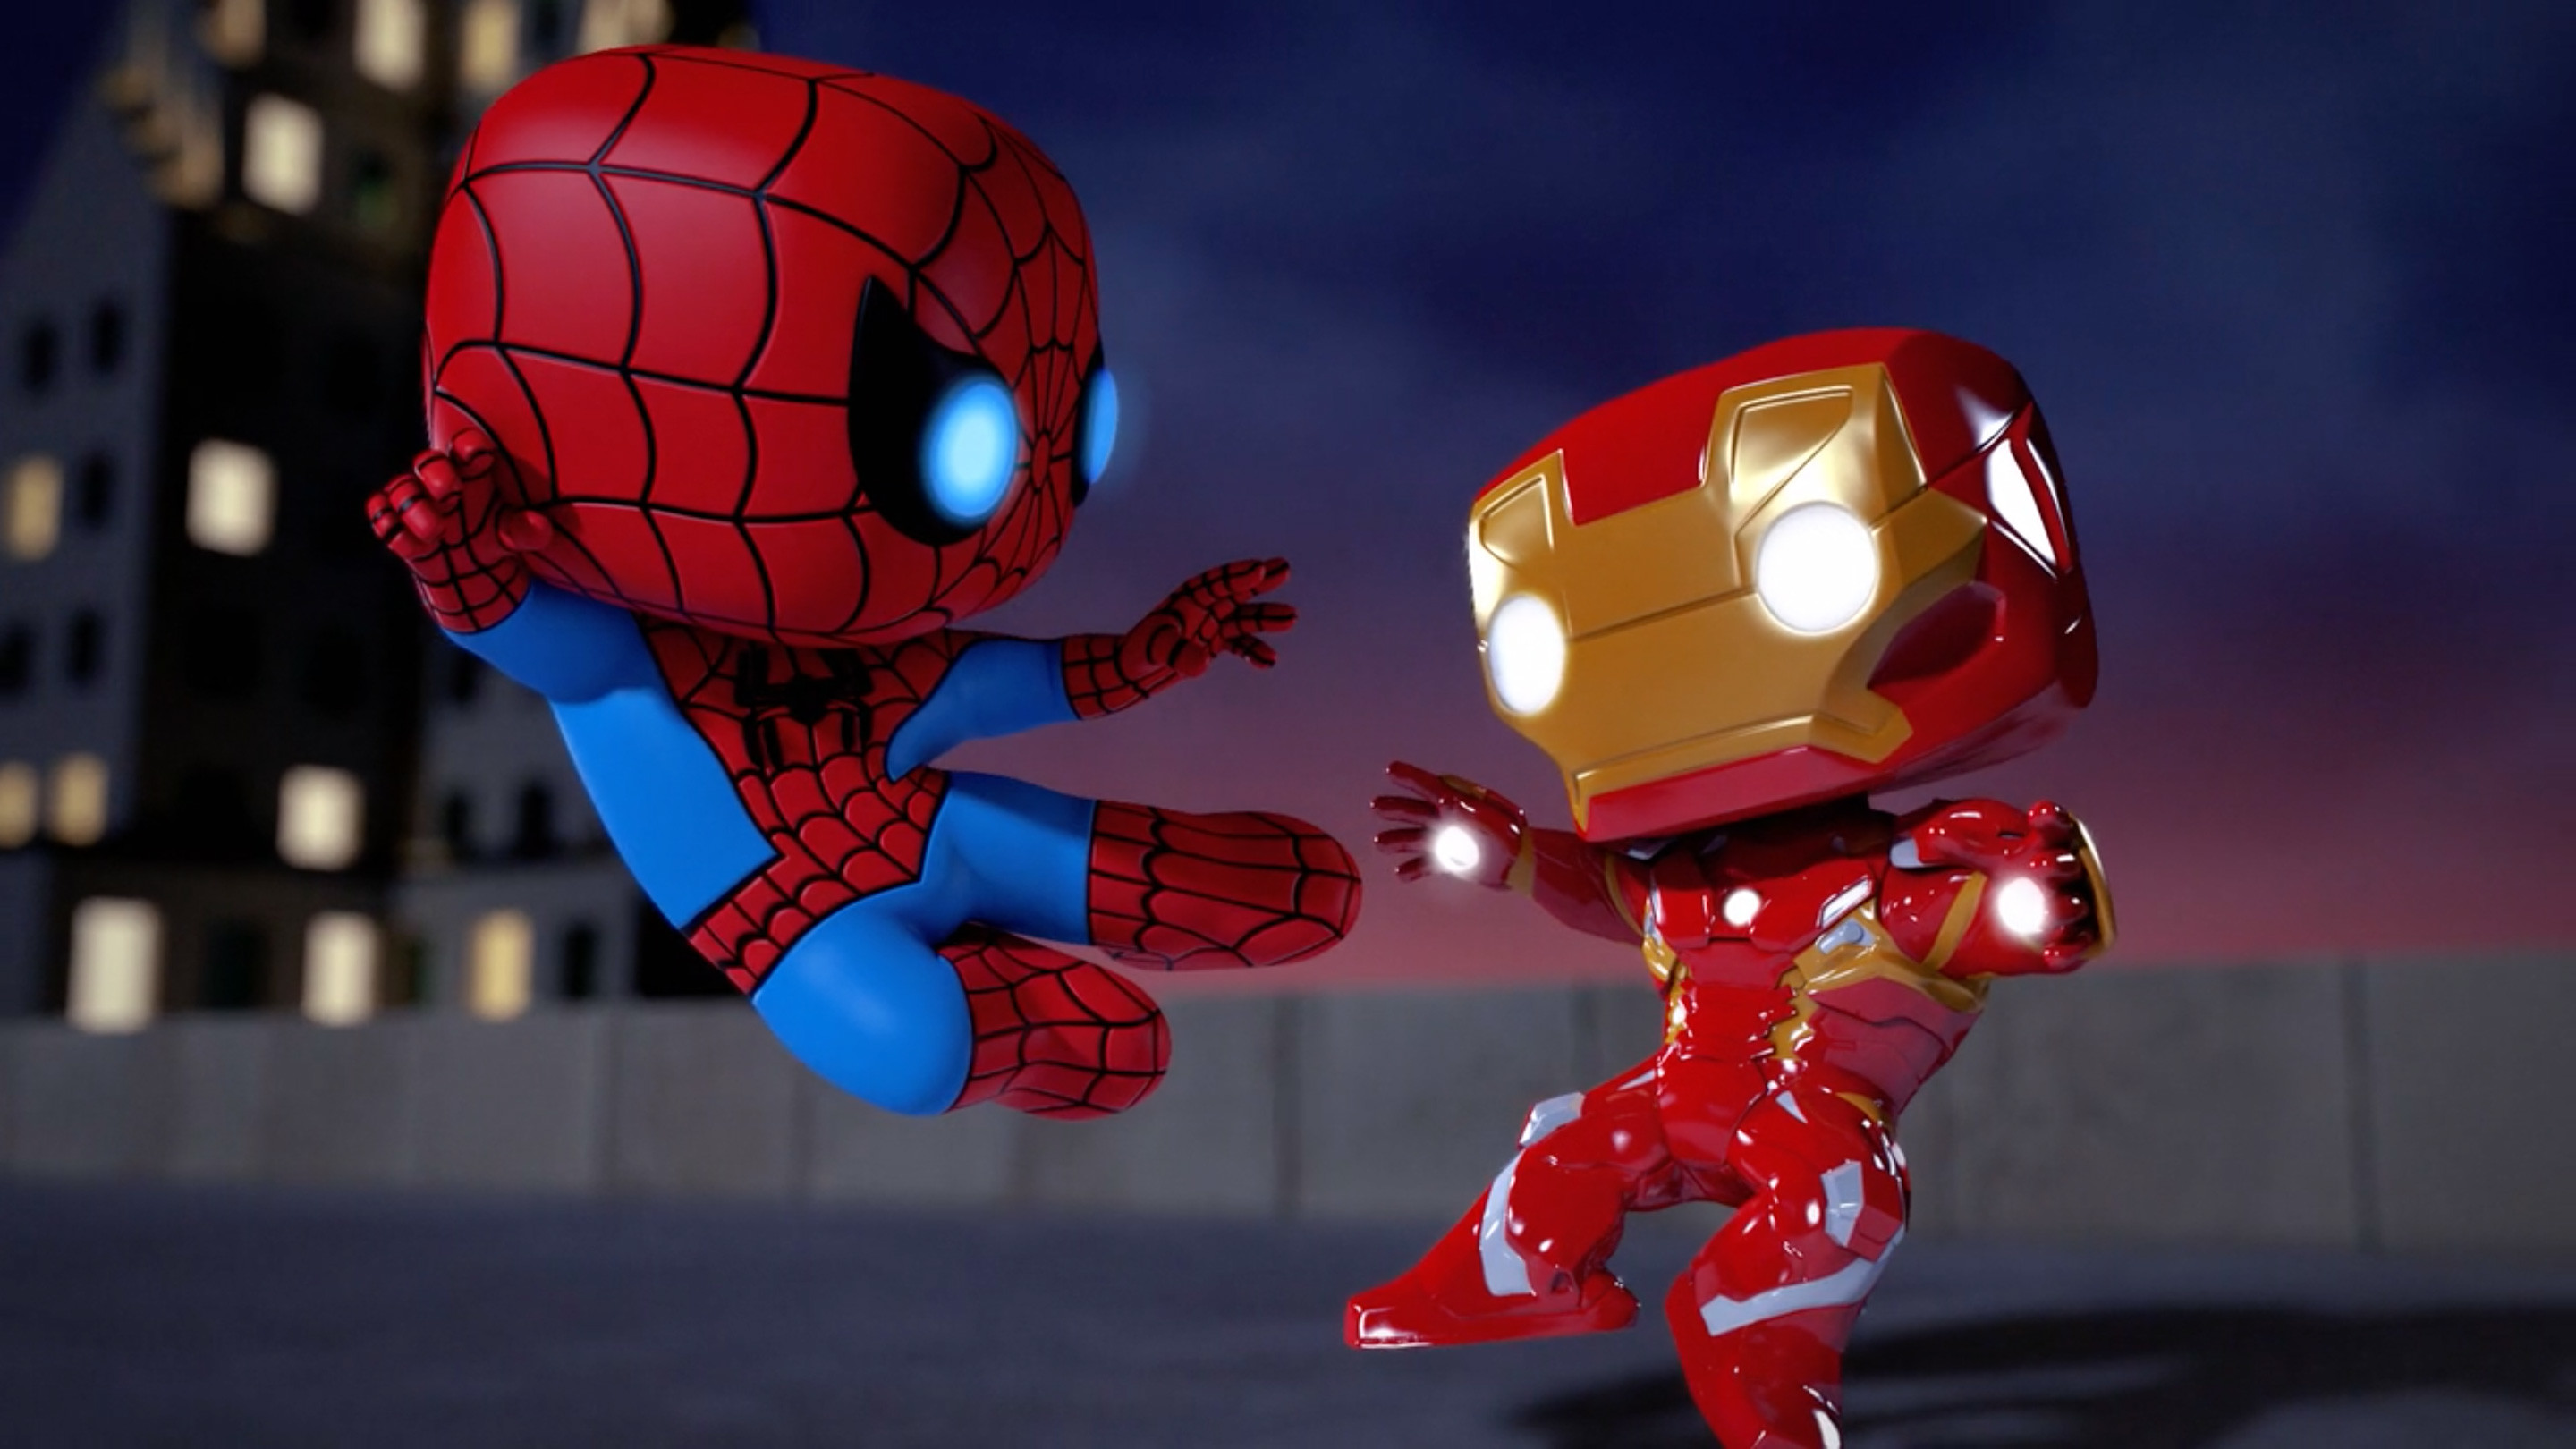 2880x1620 Iron Man Vs Spiderman Spellbound Animated Movie